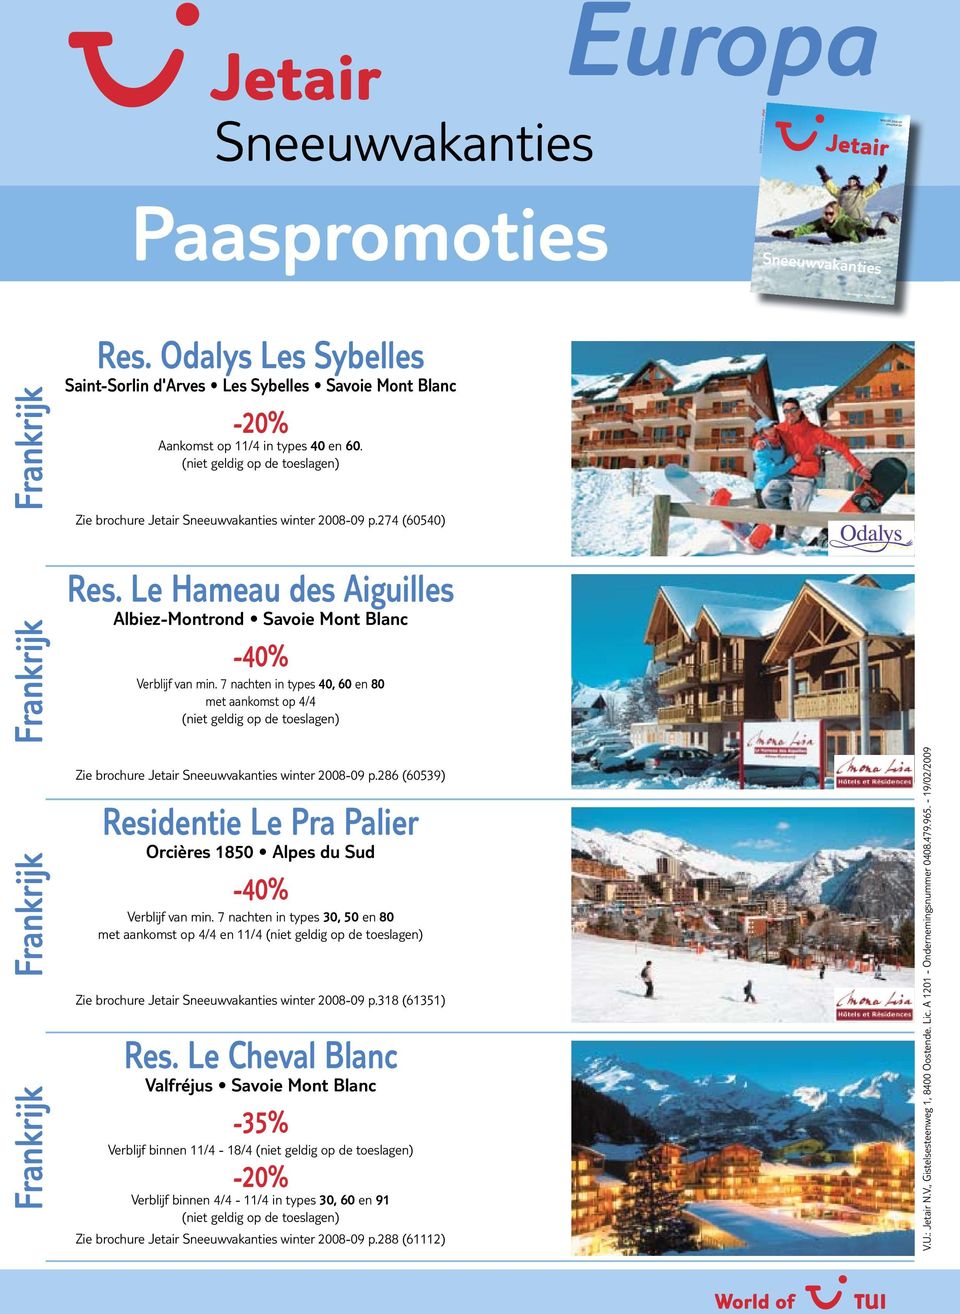 7 nachten in types 40, 60 en 80 met aankomst op 4/4 Zie brochure Jetair winter 2008-09 p.286 (60539) Residentie Le Pra Palier Orcières 1850 Alpes du Sud -40% Verblijf van min.